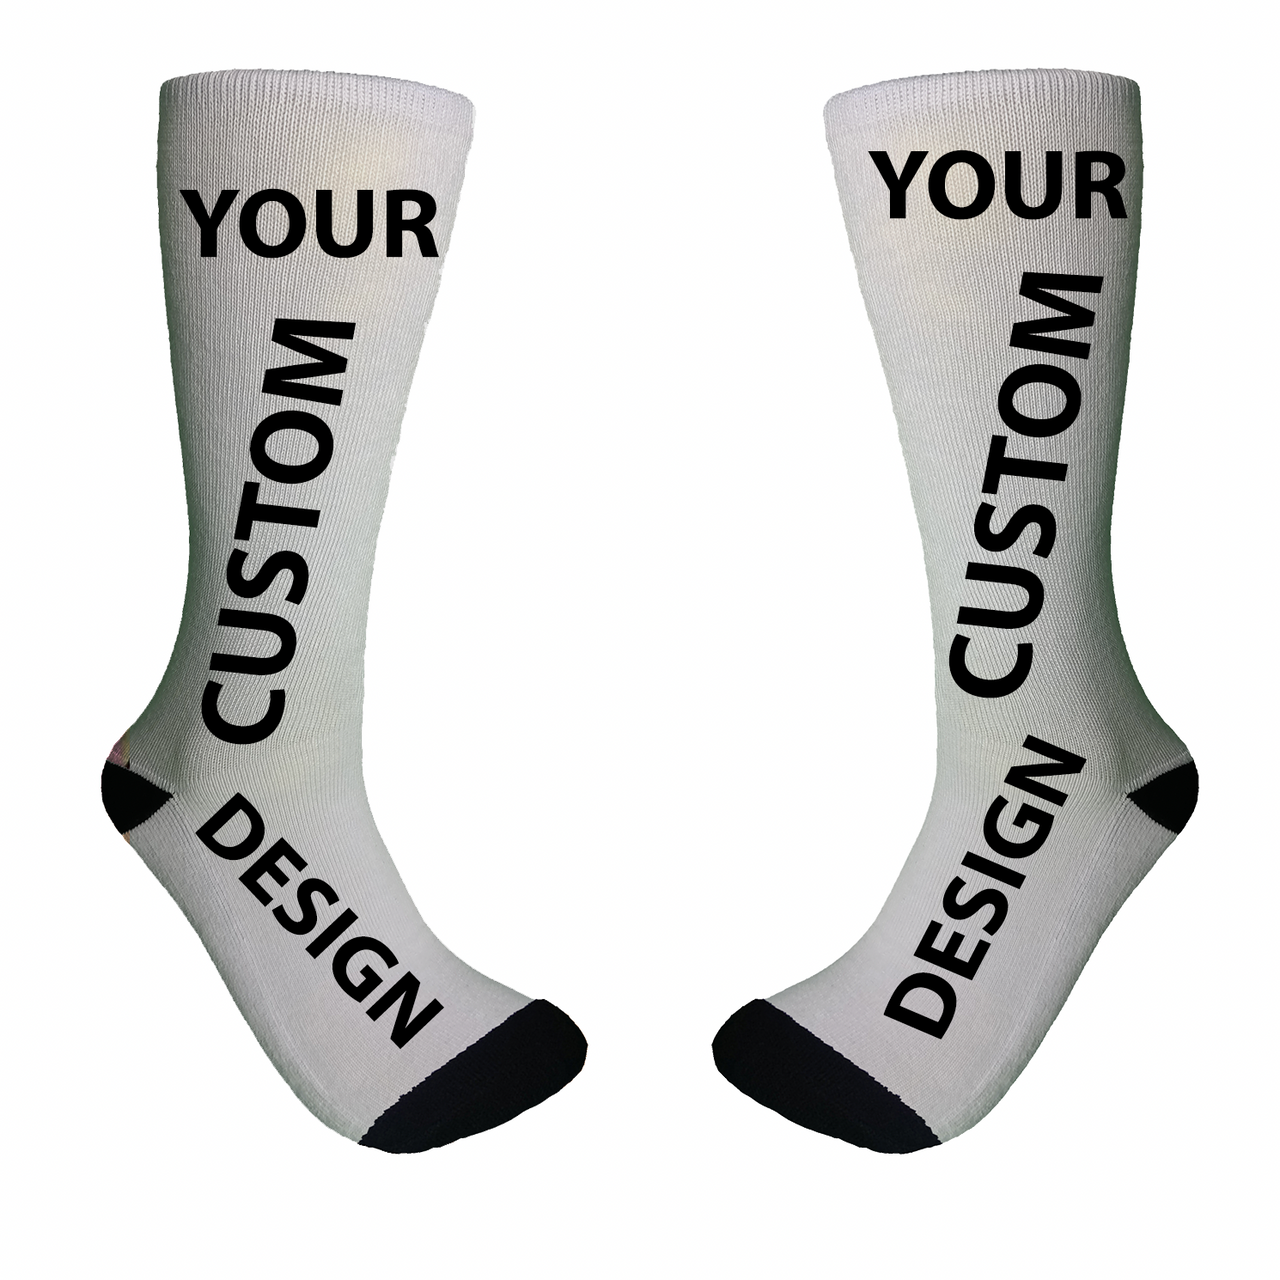 Custom Logo/Design/Image Designed Socks